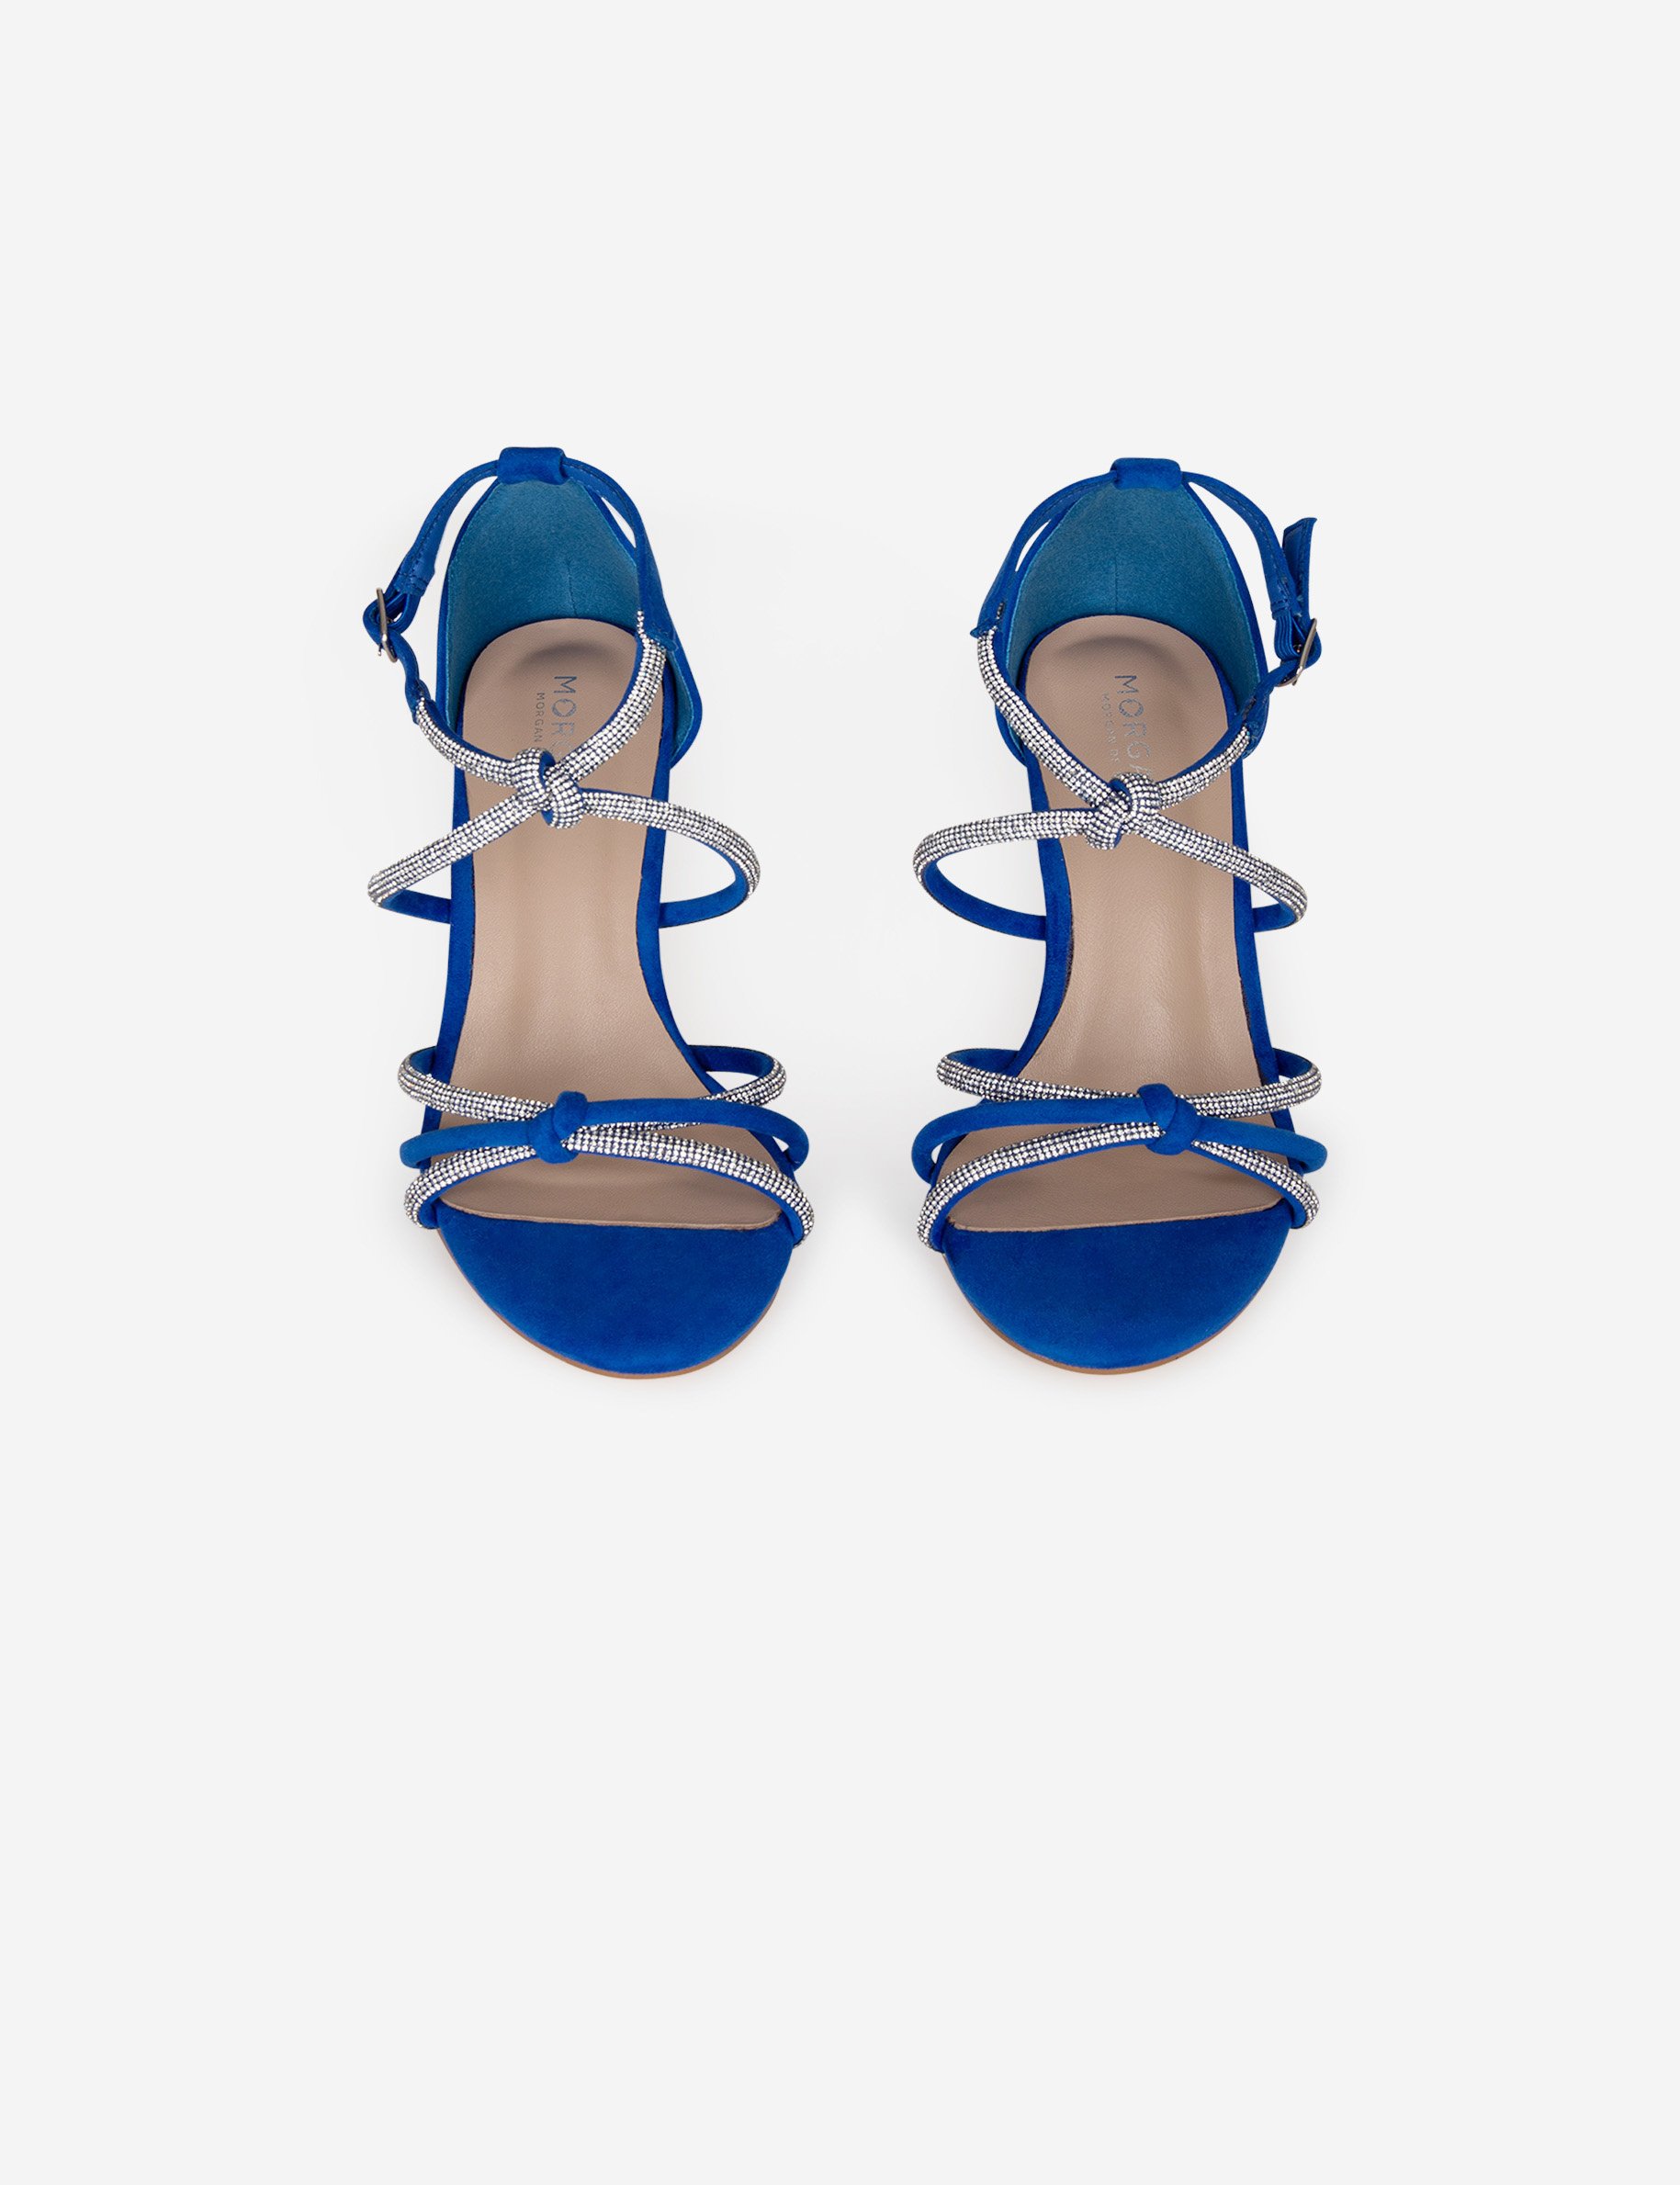 Sandals with heels and rhinestones blue ladies'